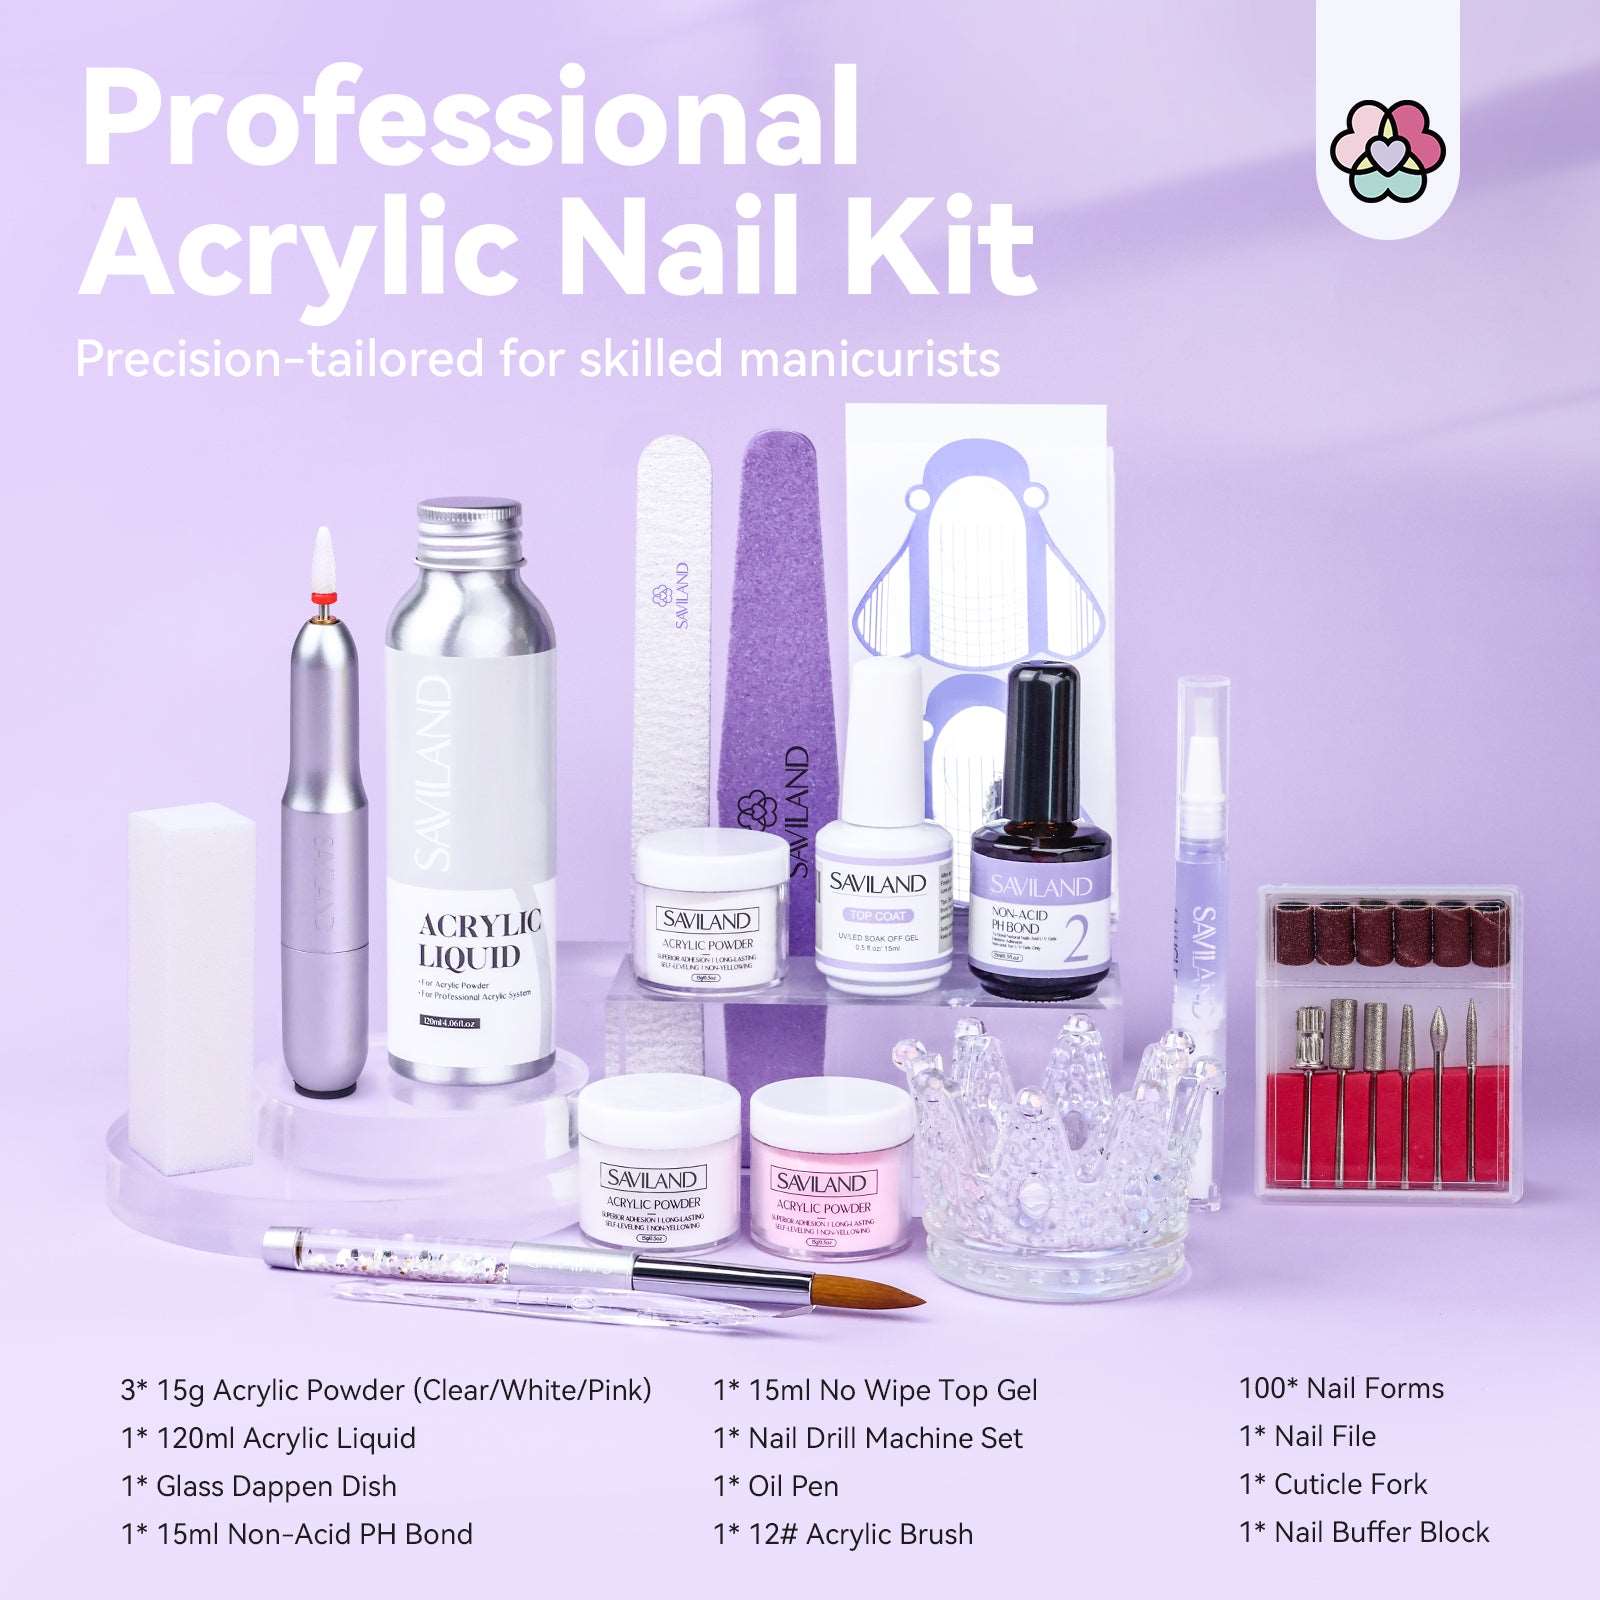 Acrylic Nail Kit with Nail Drill - Professional Use Only Acrylic Powder